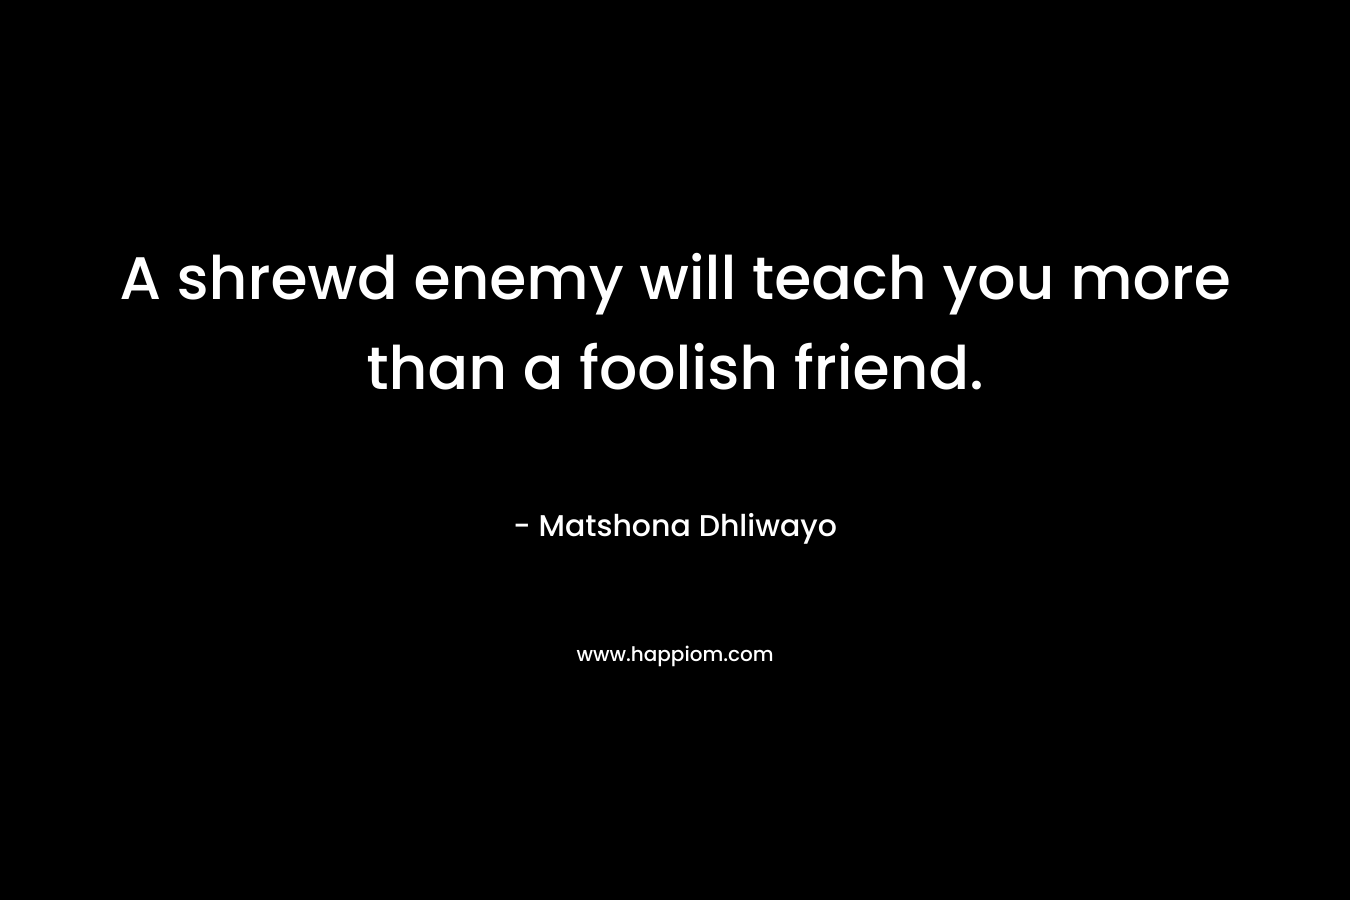 A shrewd enemy will teach you more than a foolish friend.